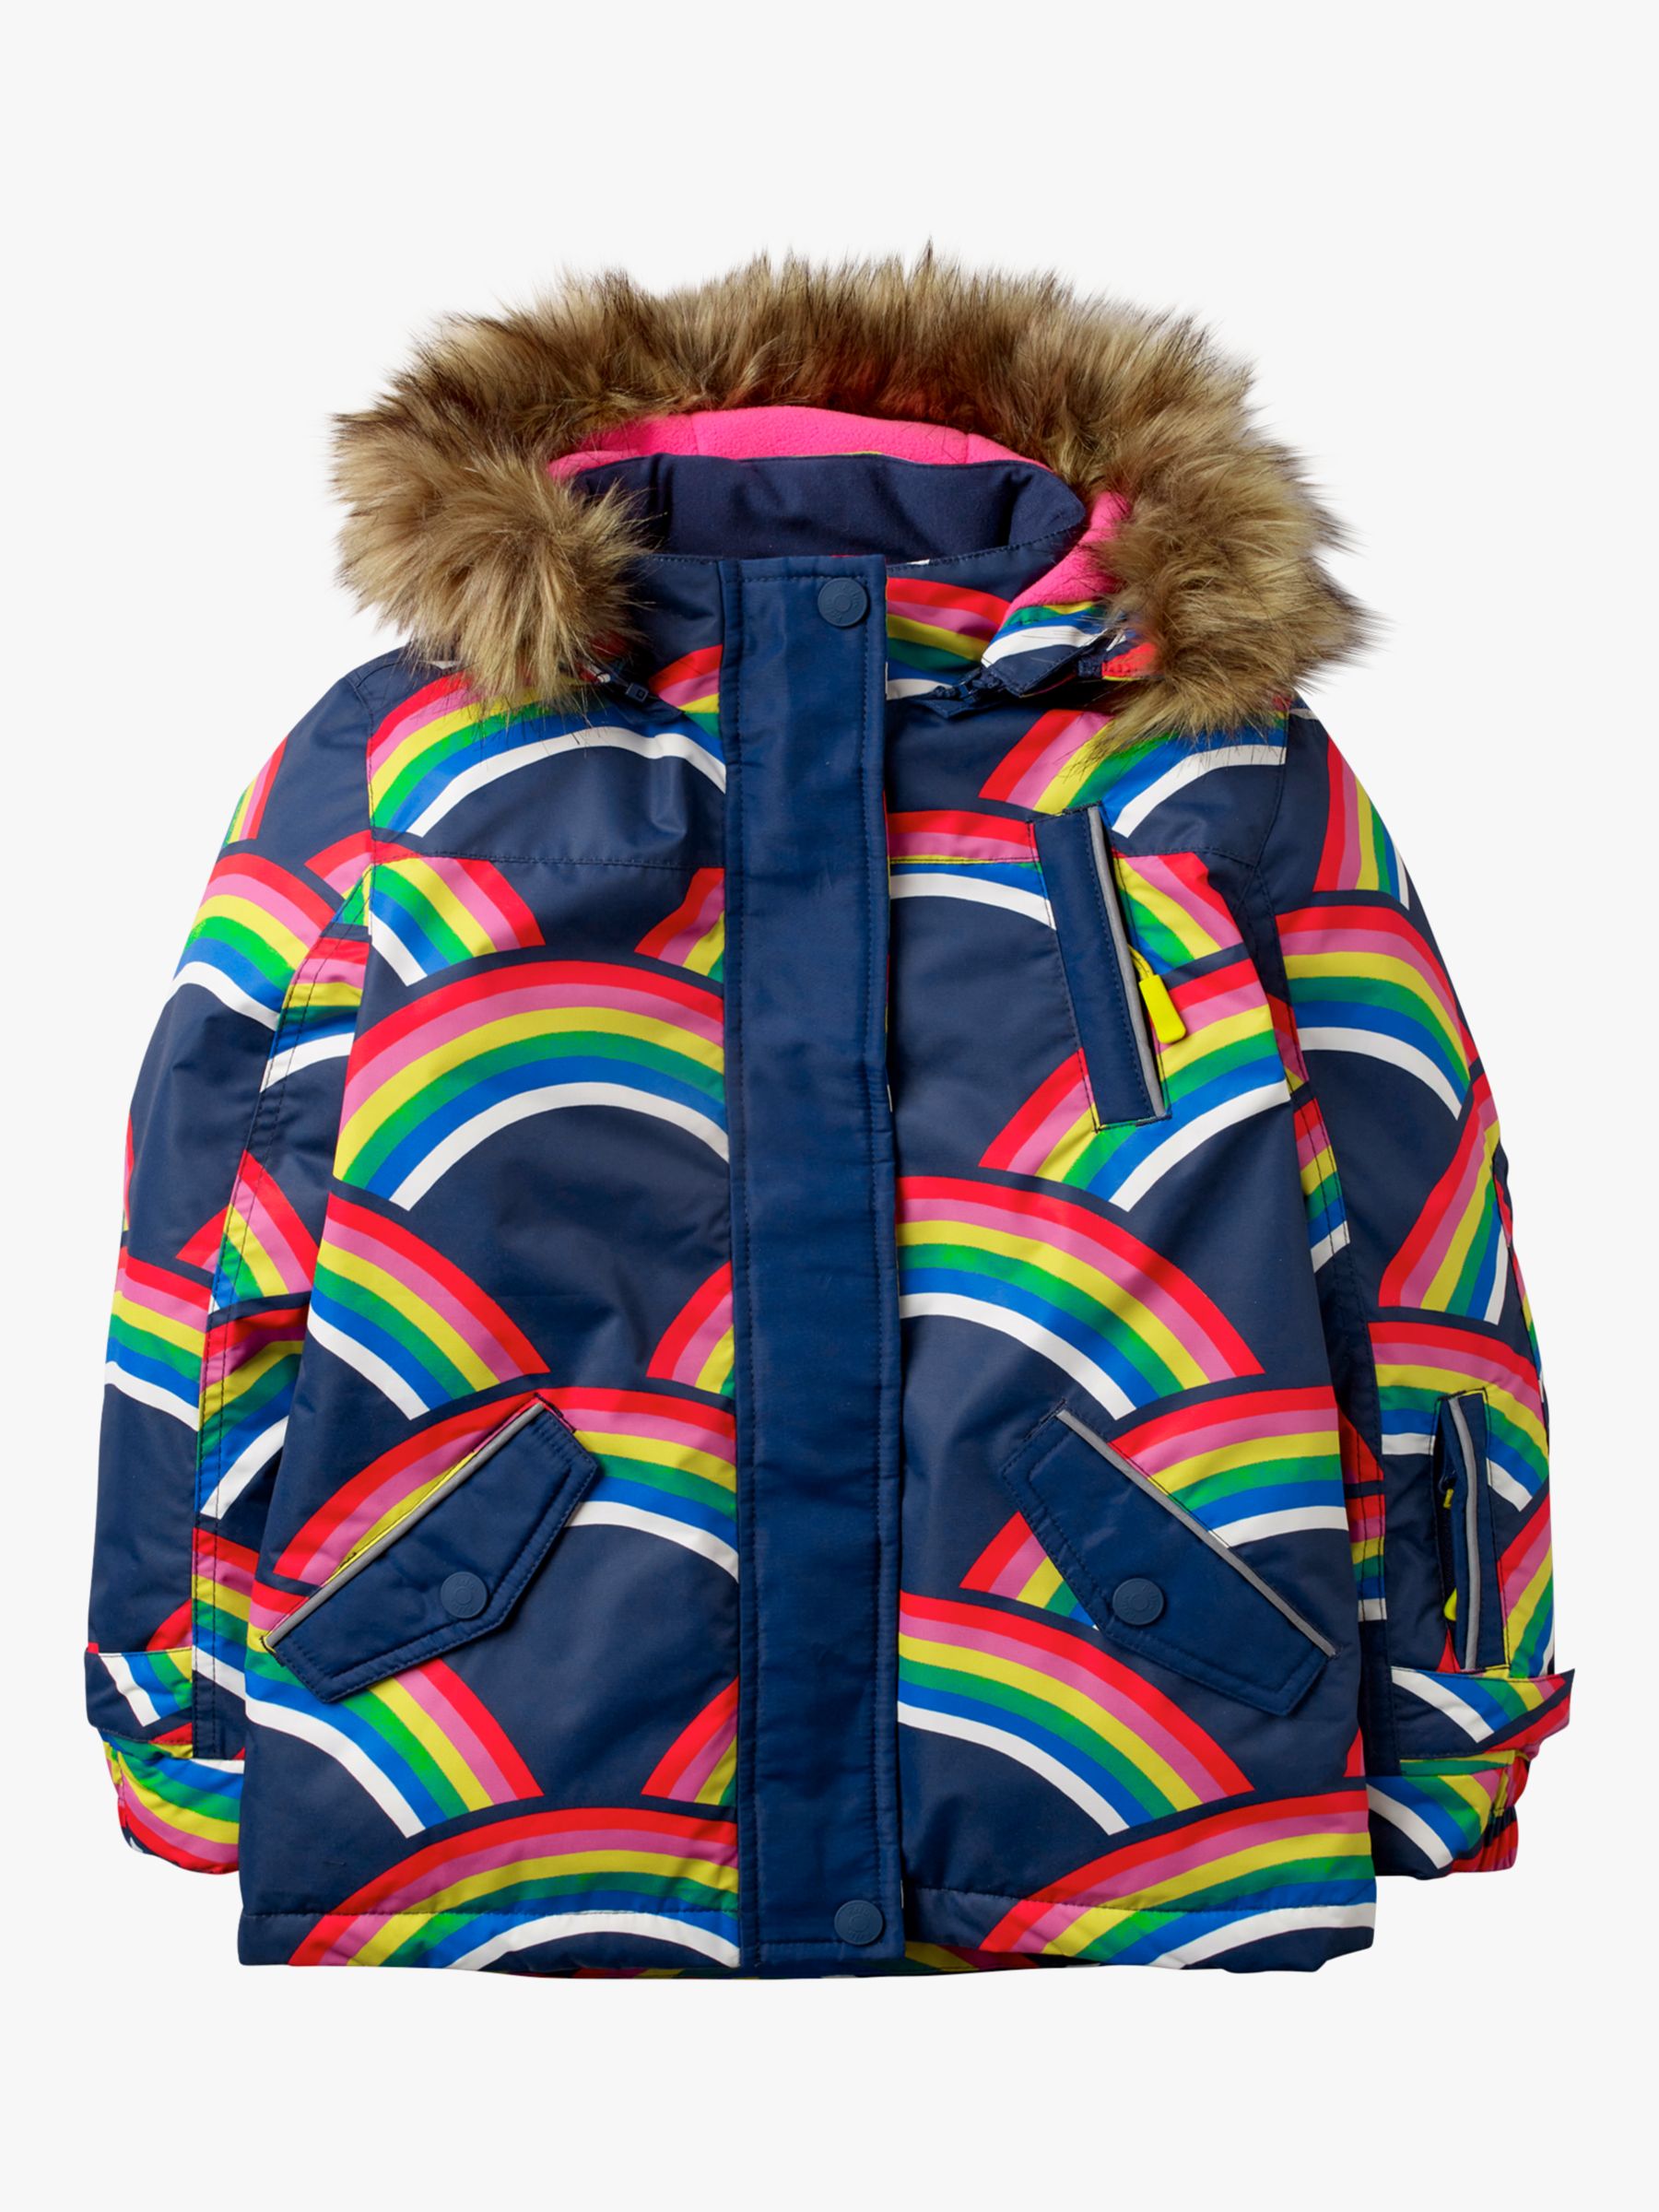 Kaicran Kids Baby Boys Girls Rainbow Jackets Waterproof Hooded Zipper Stripe Rain Jackets Coat Outfits